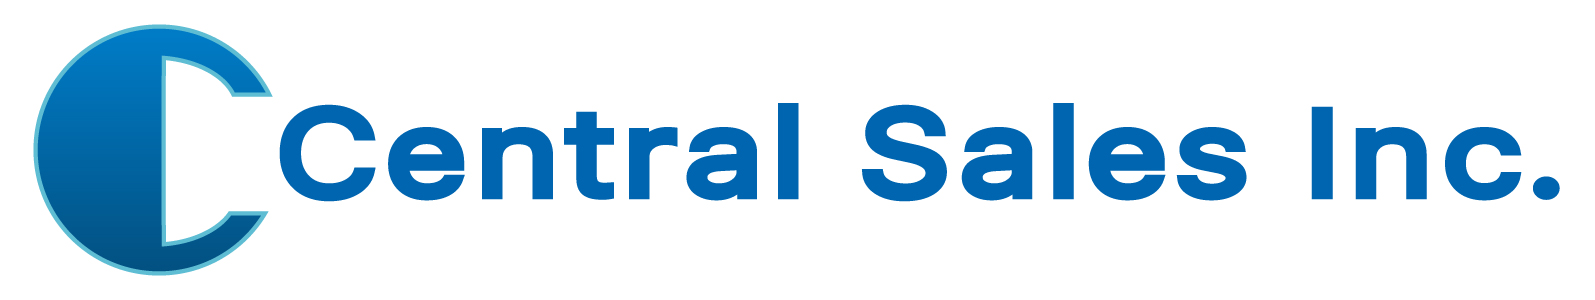 Central Sales, Inc.